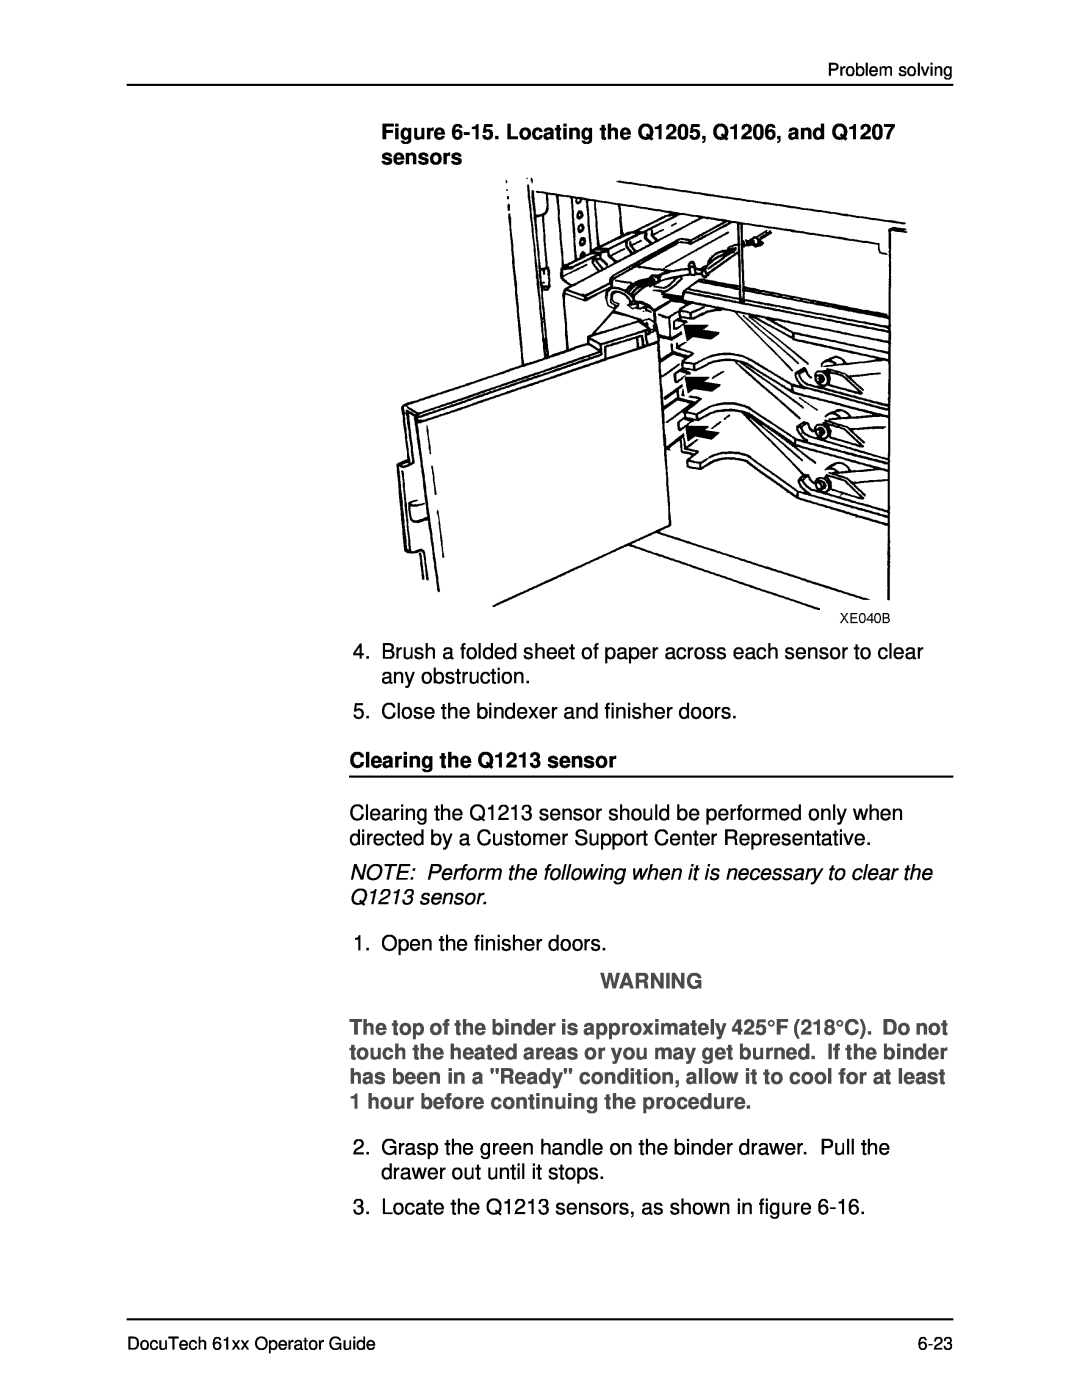 Xerox 61xx manual 15. Locating the Q1205, Q1206, and Q1207 sensors, Clearing the Q1213 sensor 